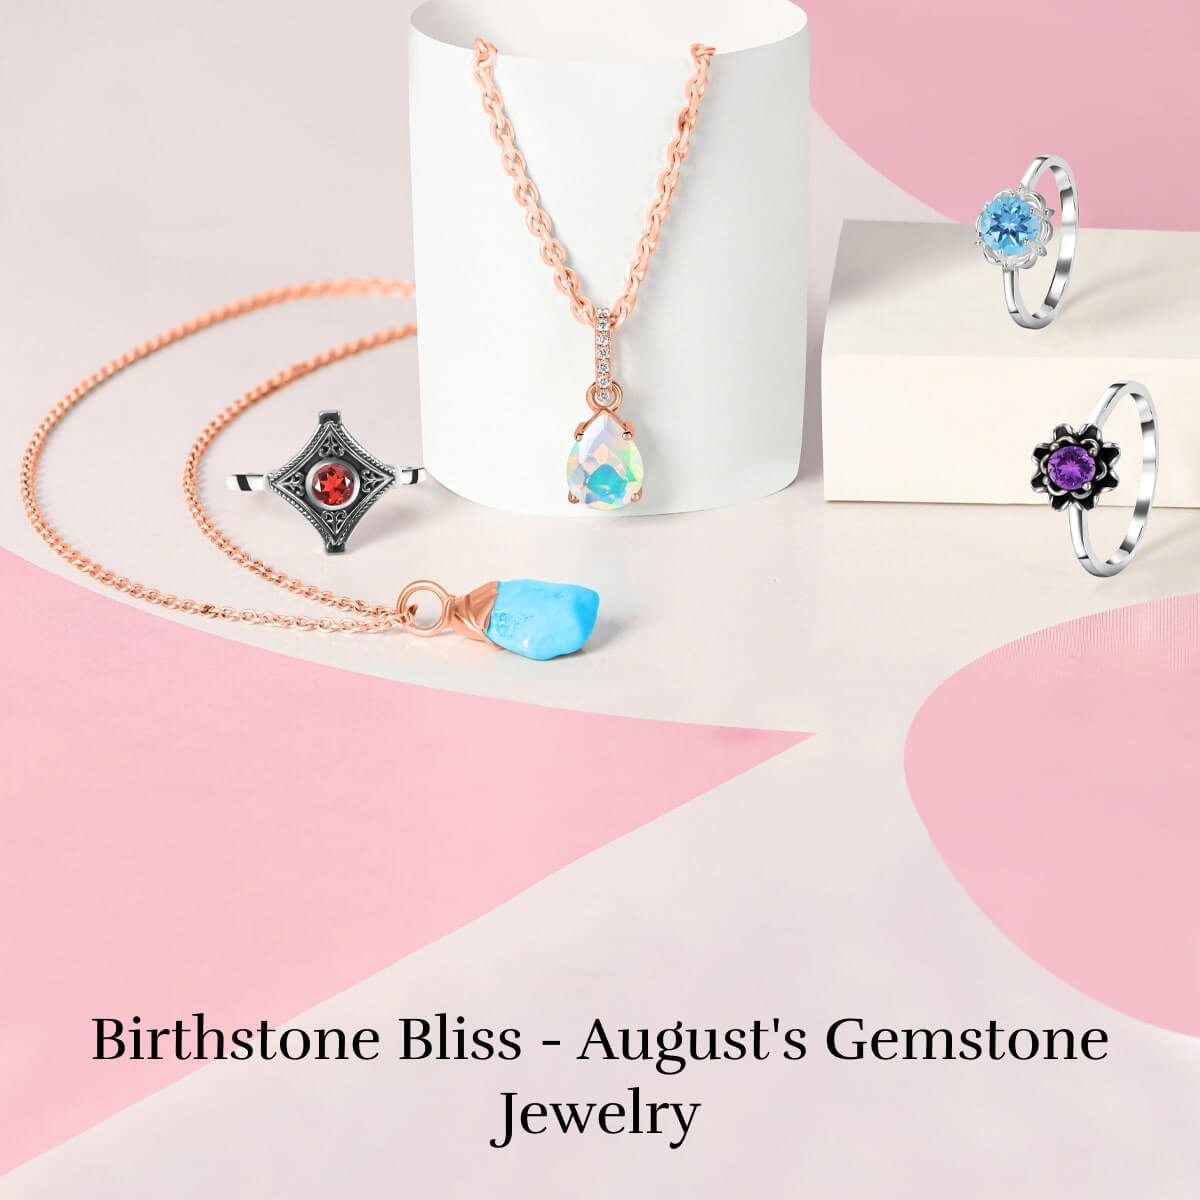 Top Magnificent Gemstone Jewelry Picks For August Birthday Girls